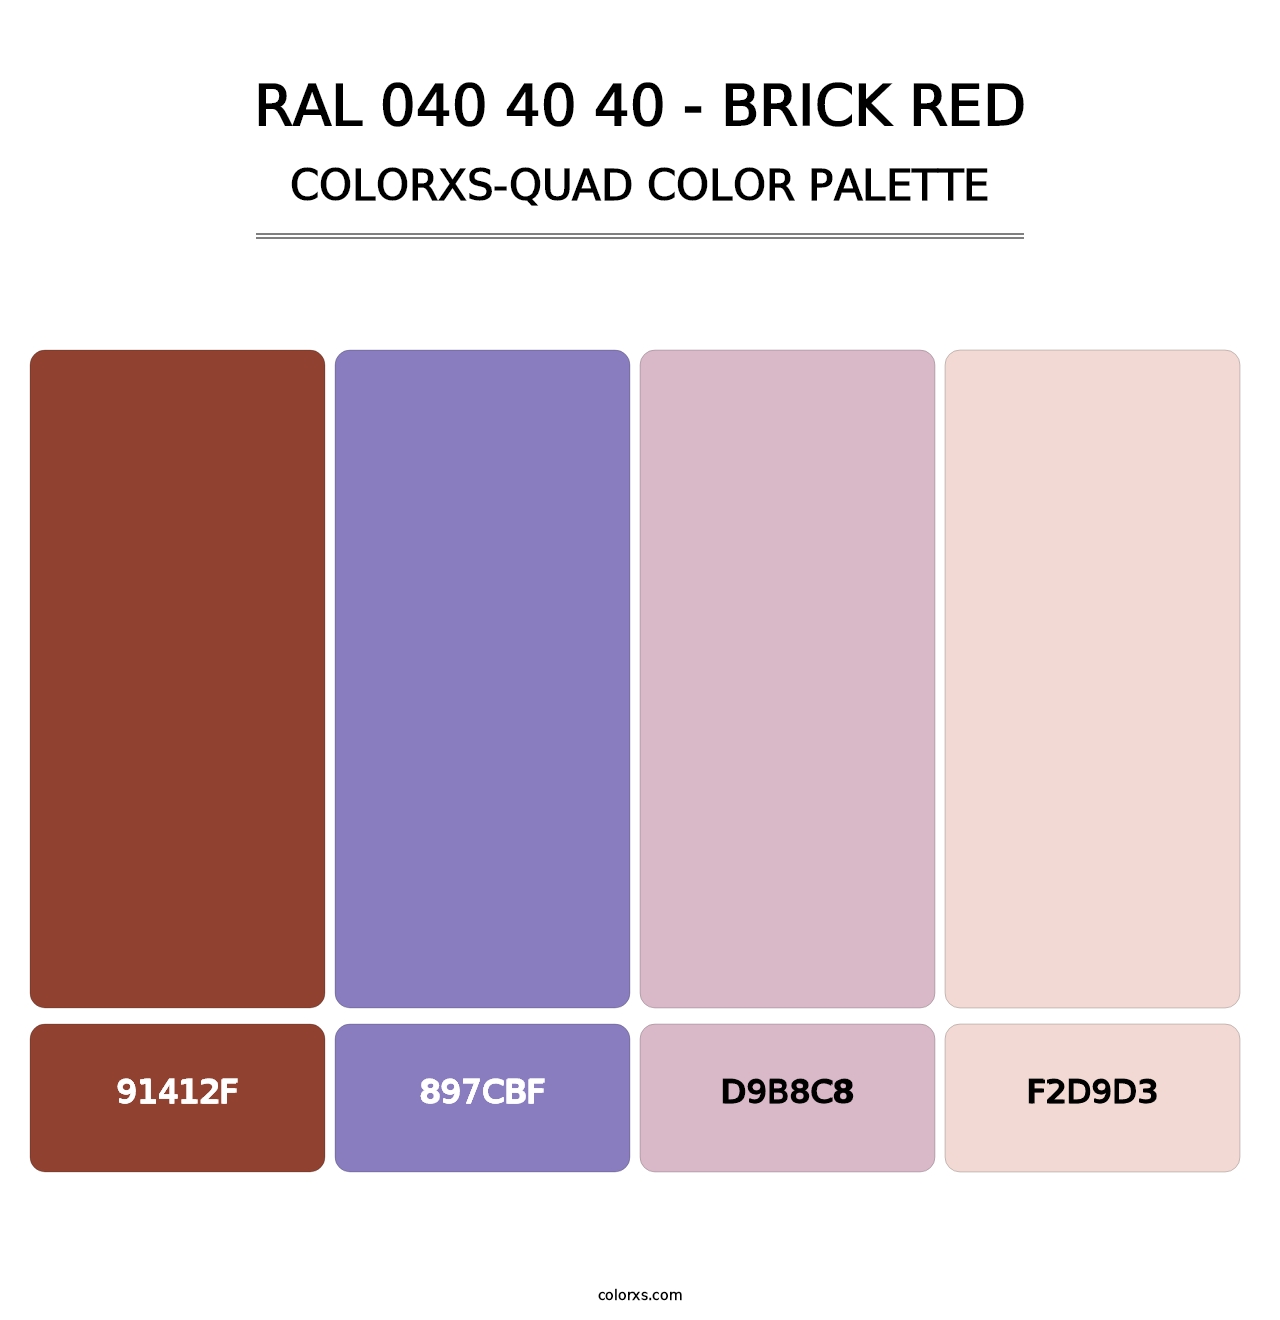 RAL 040 40 40 - Brick Red - Colorxs Quad Palette